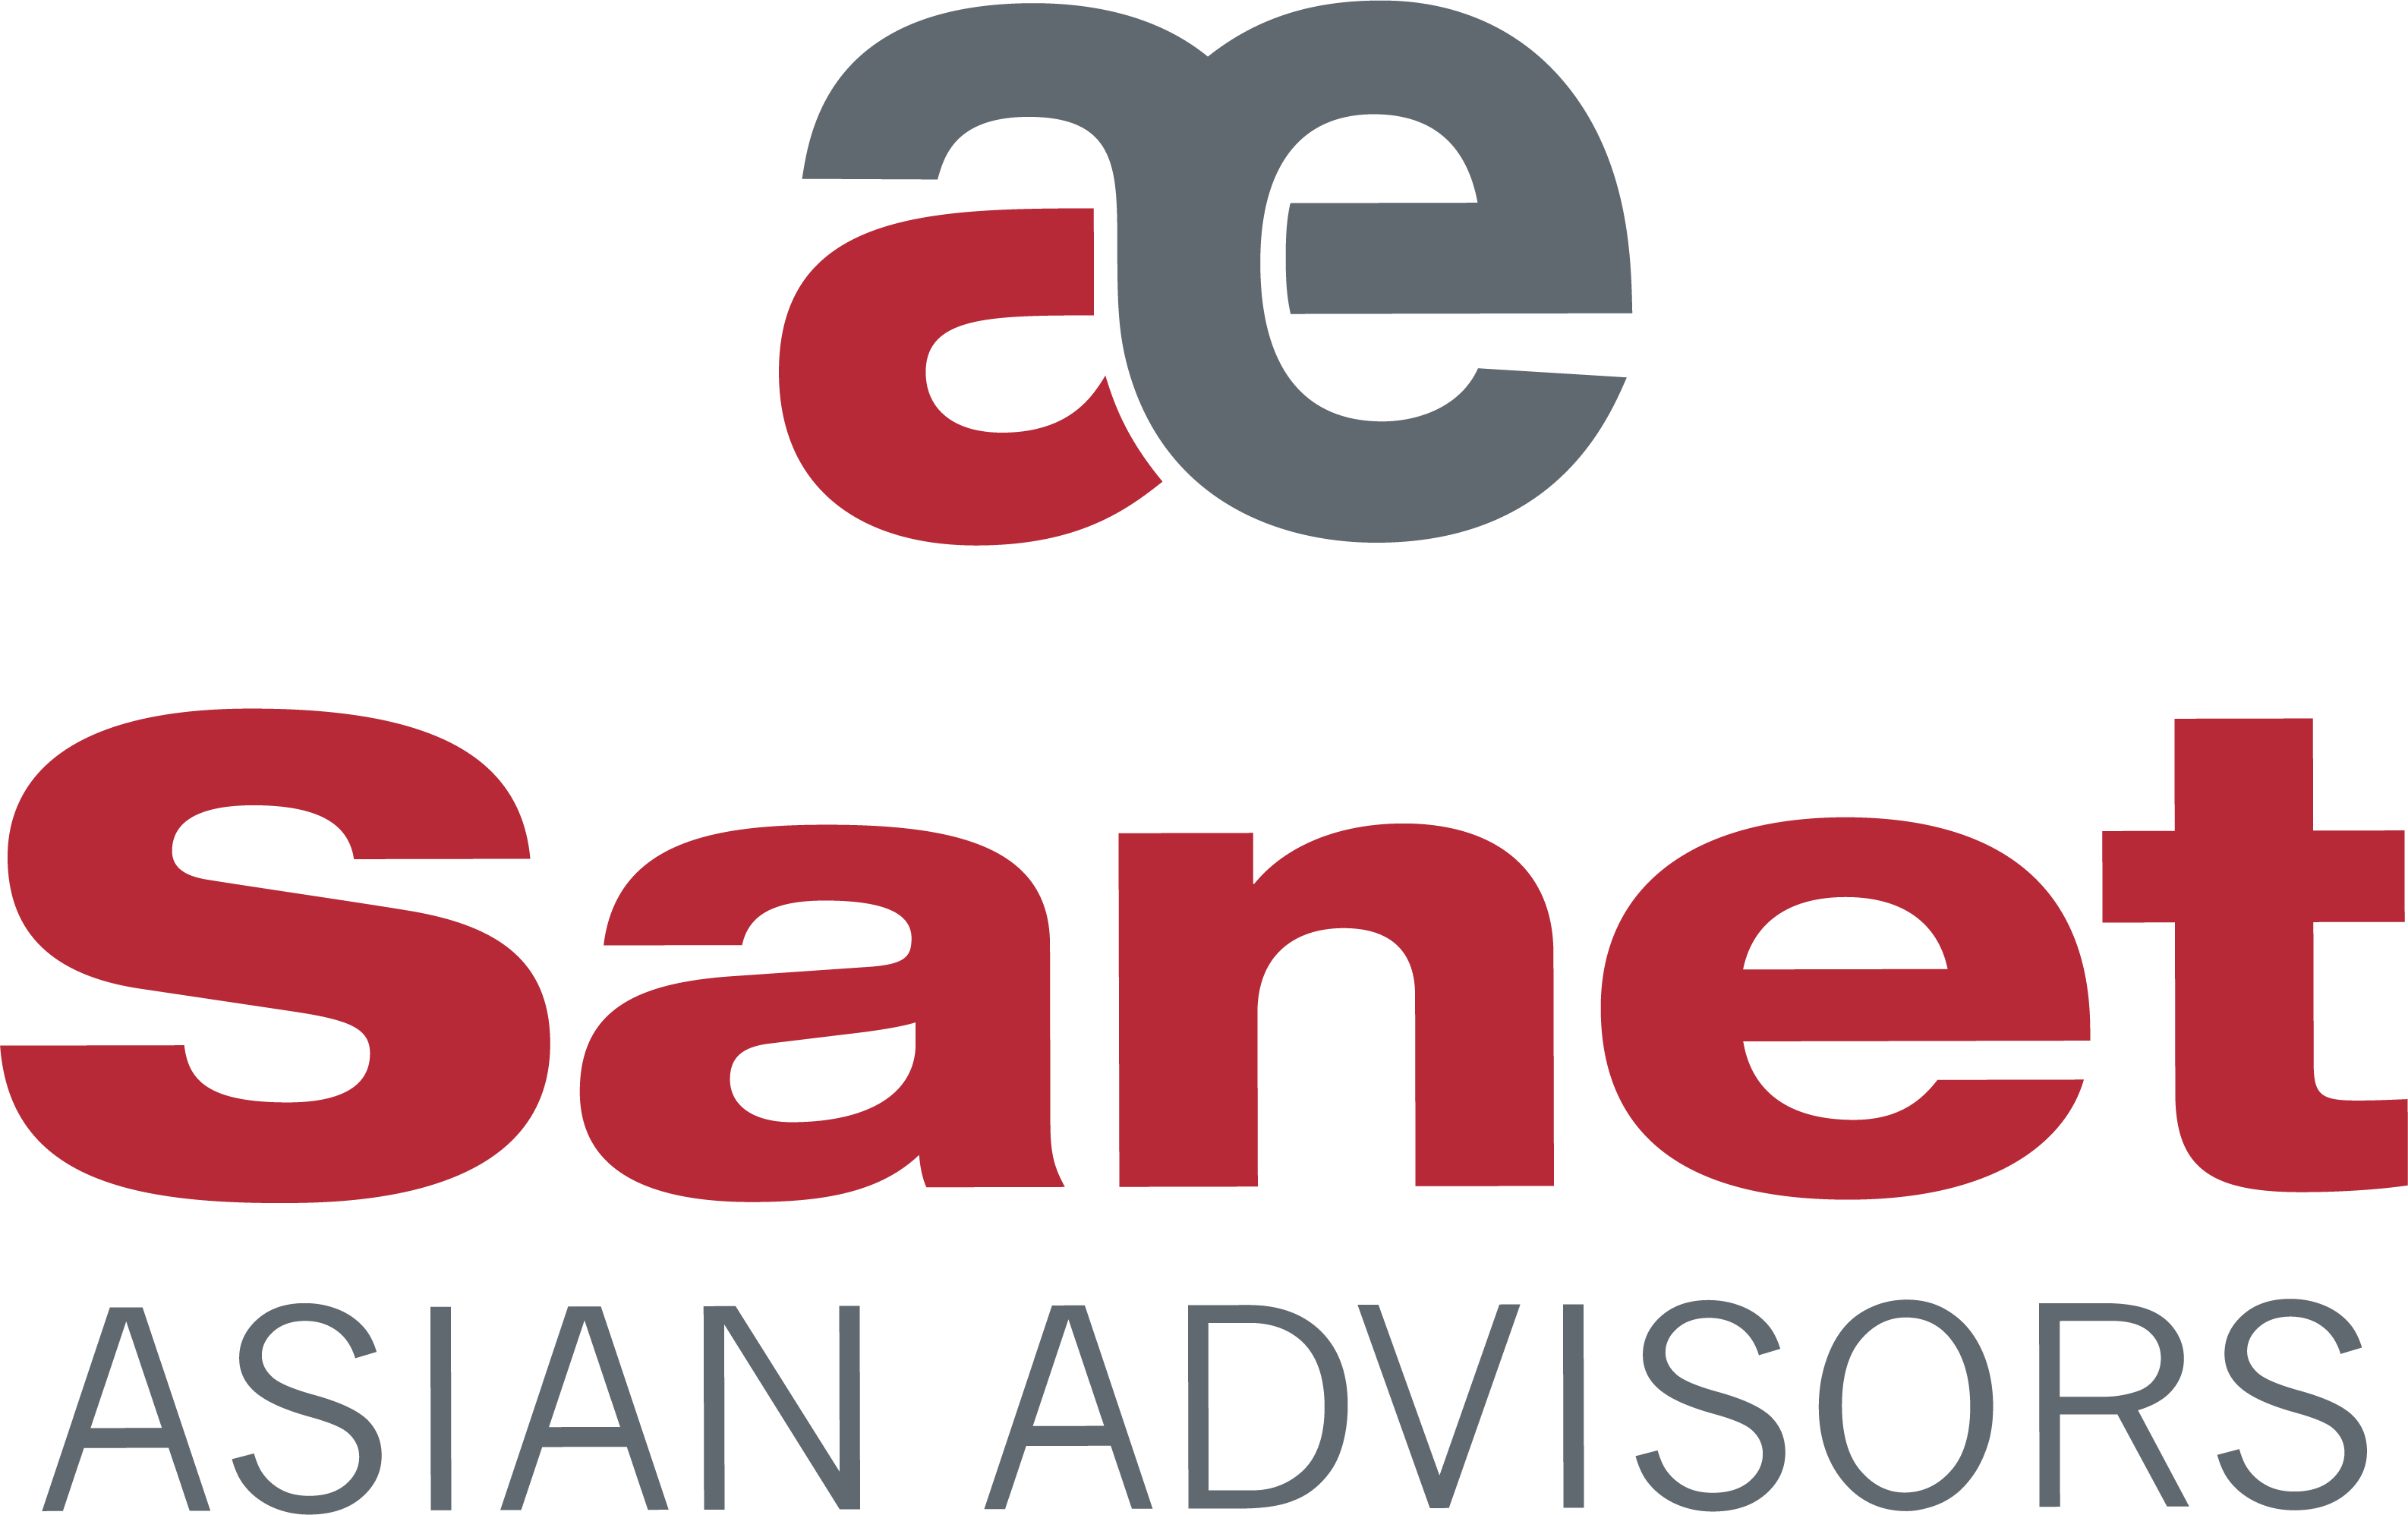 Sanet Logo